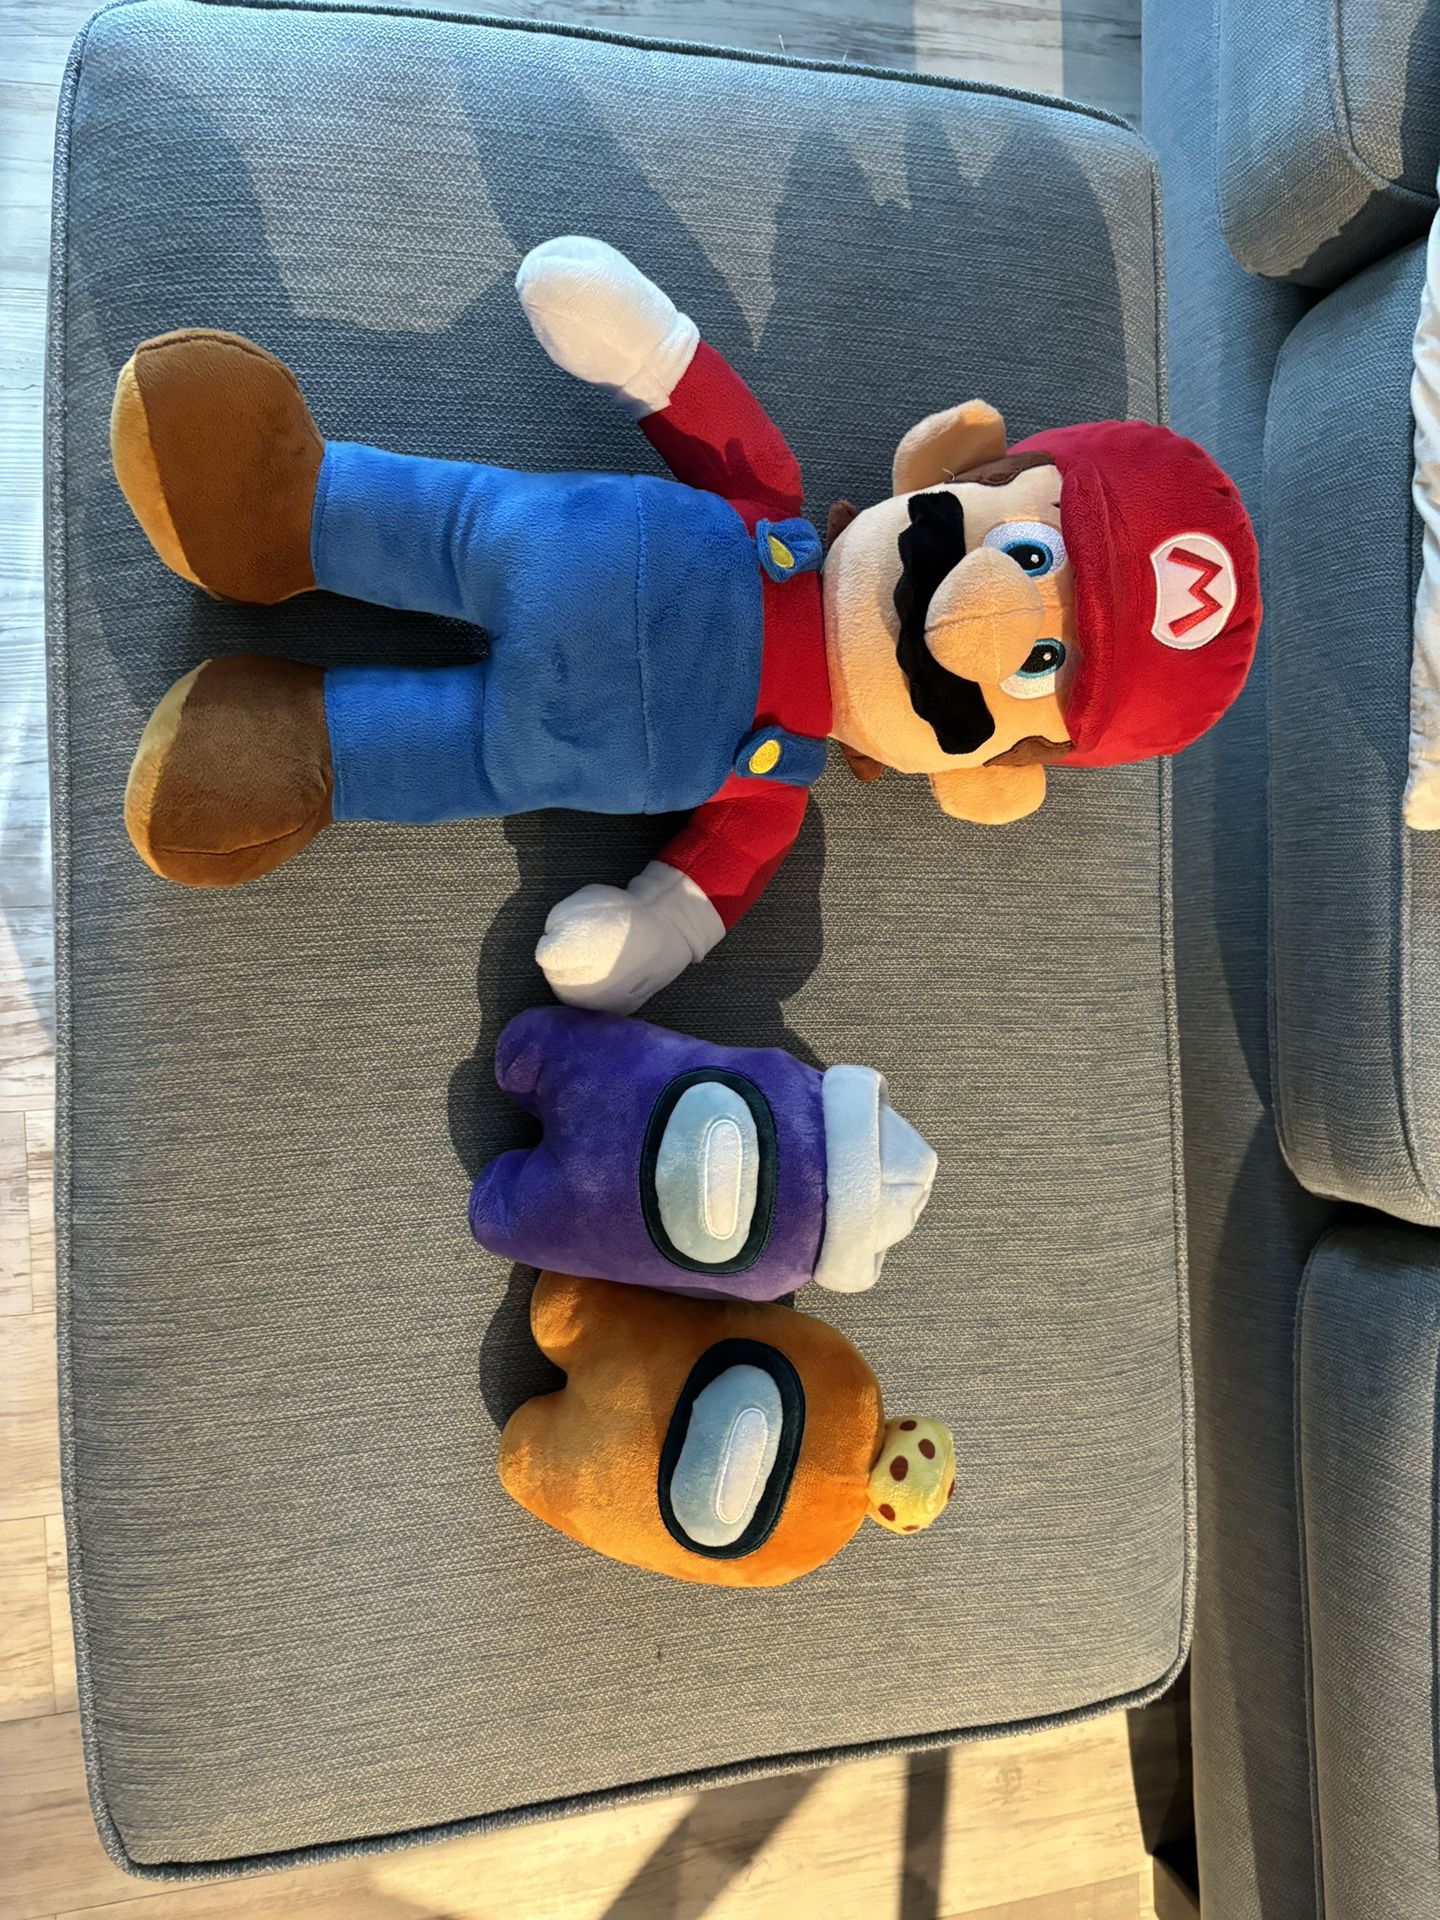 3 Stuffed Animal Mario and Among Us